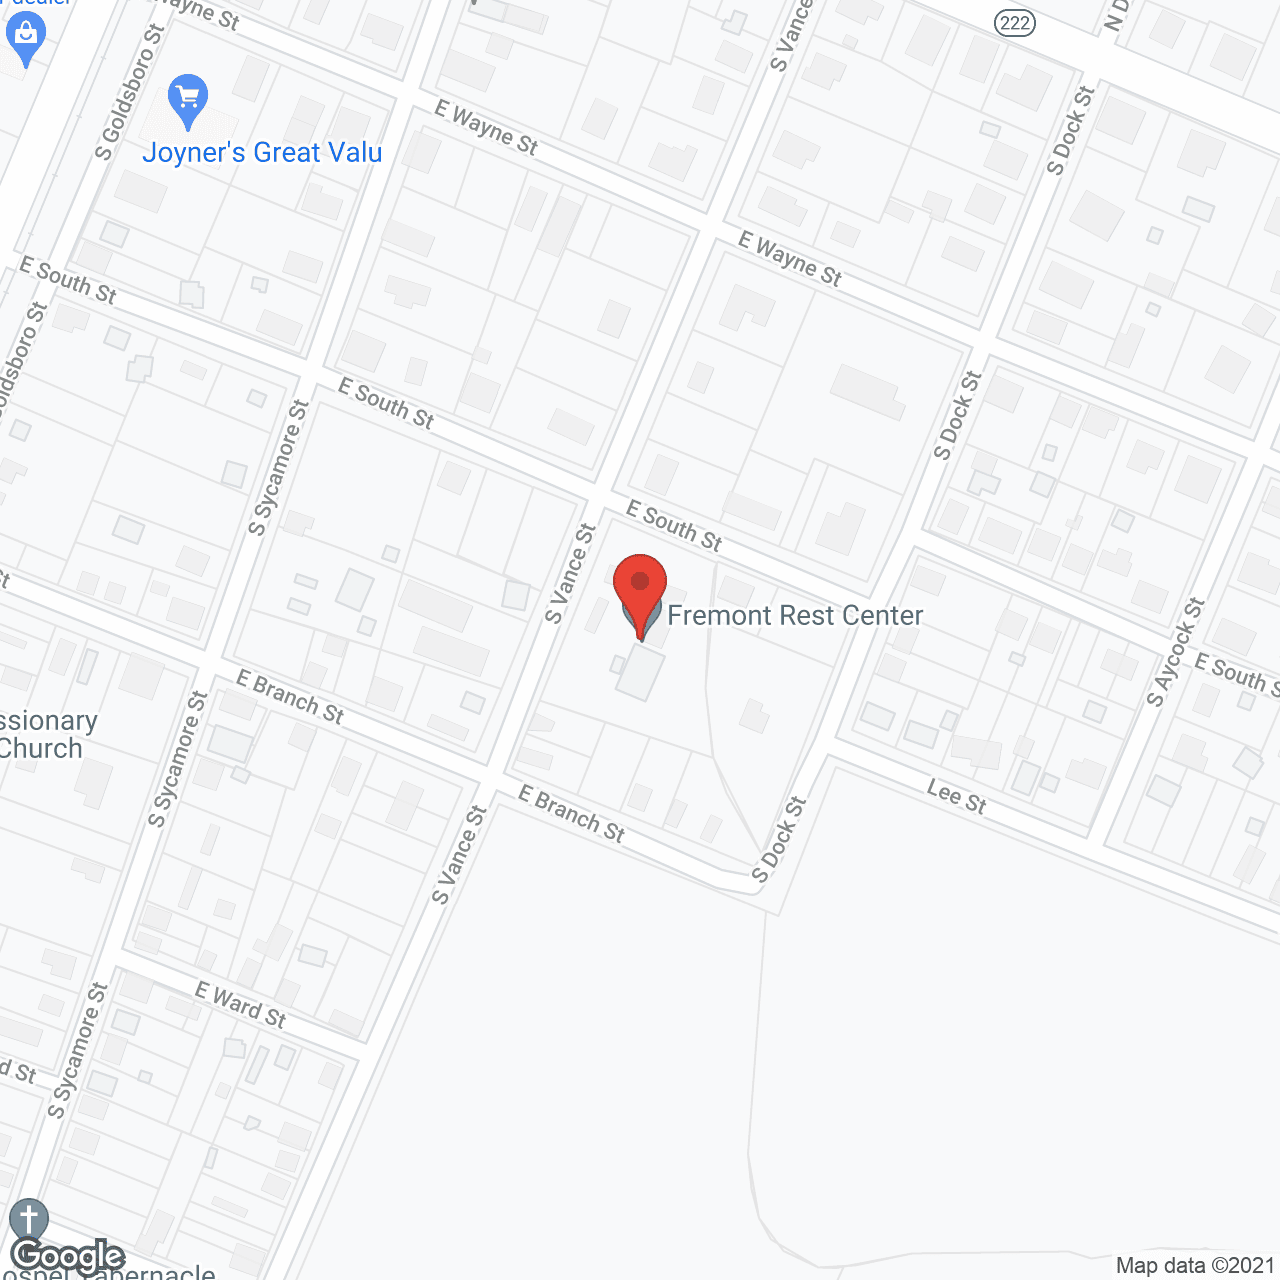 Fremont Rest Center in google map